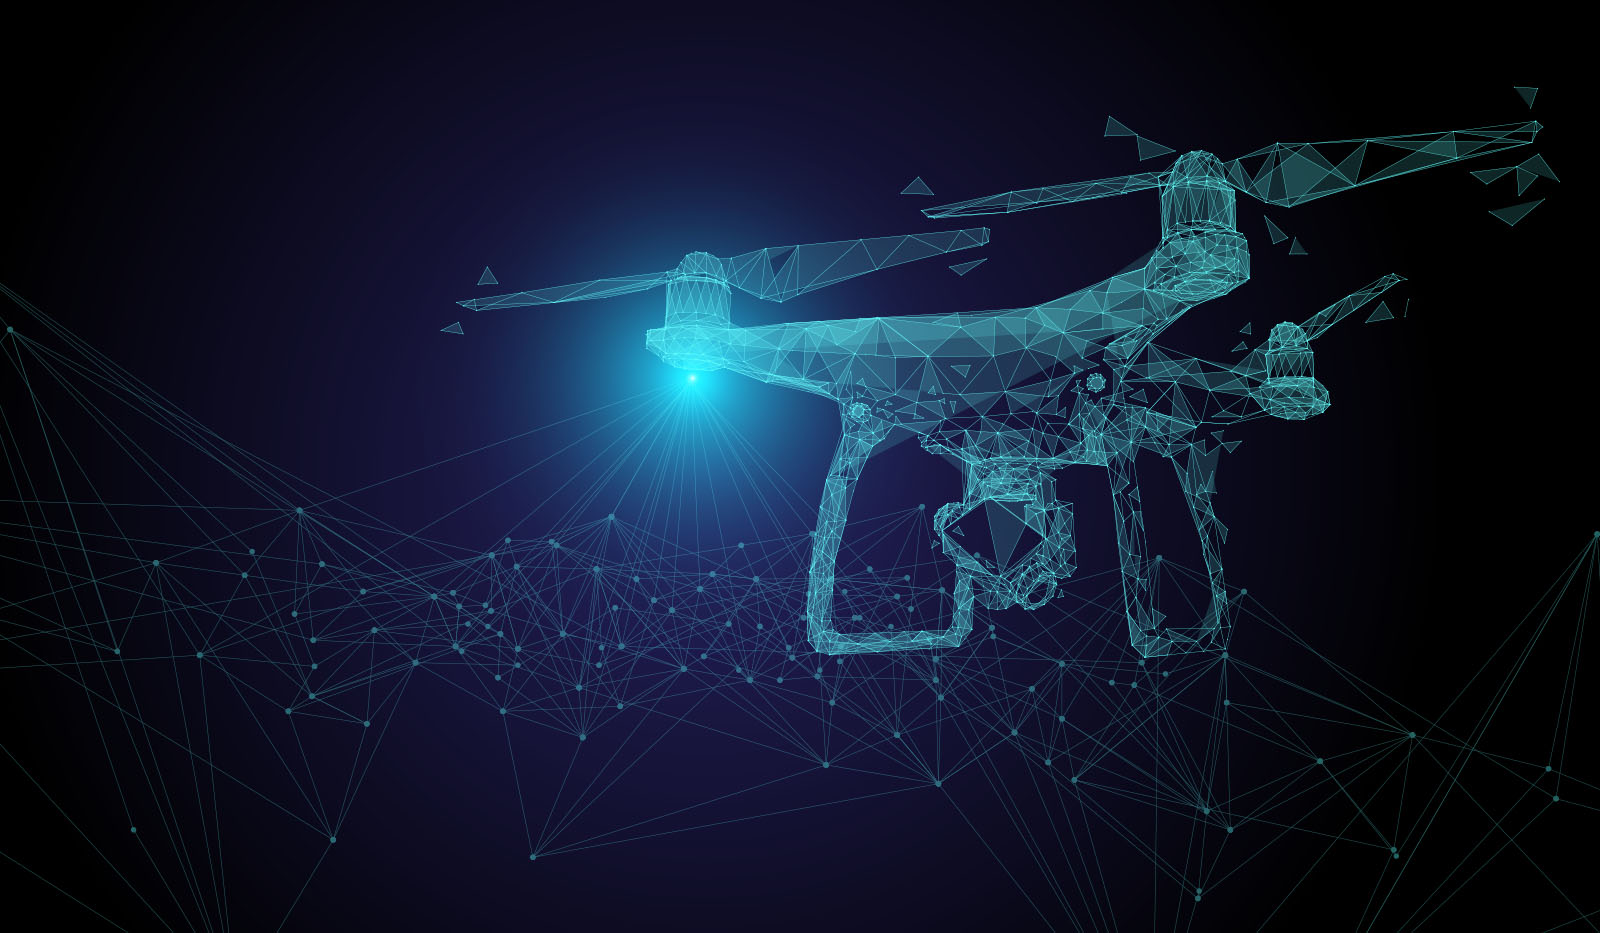 Leveraging UAVs for Deliveries, Inspection, and Surveillance